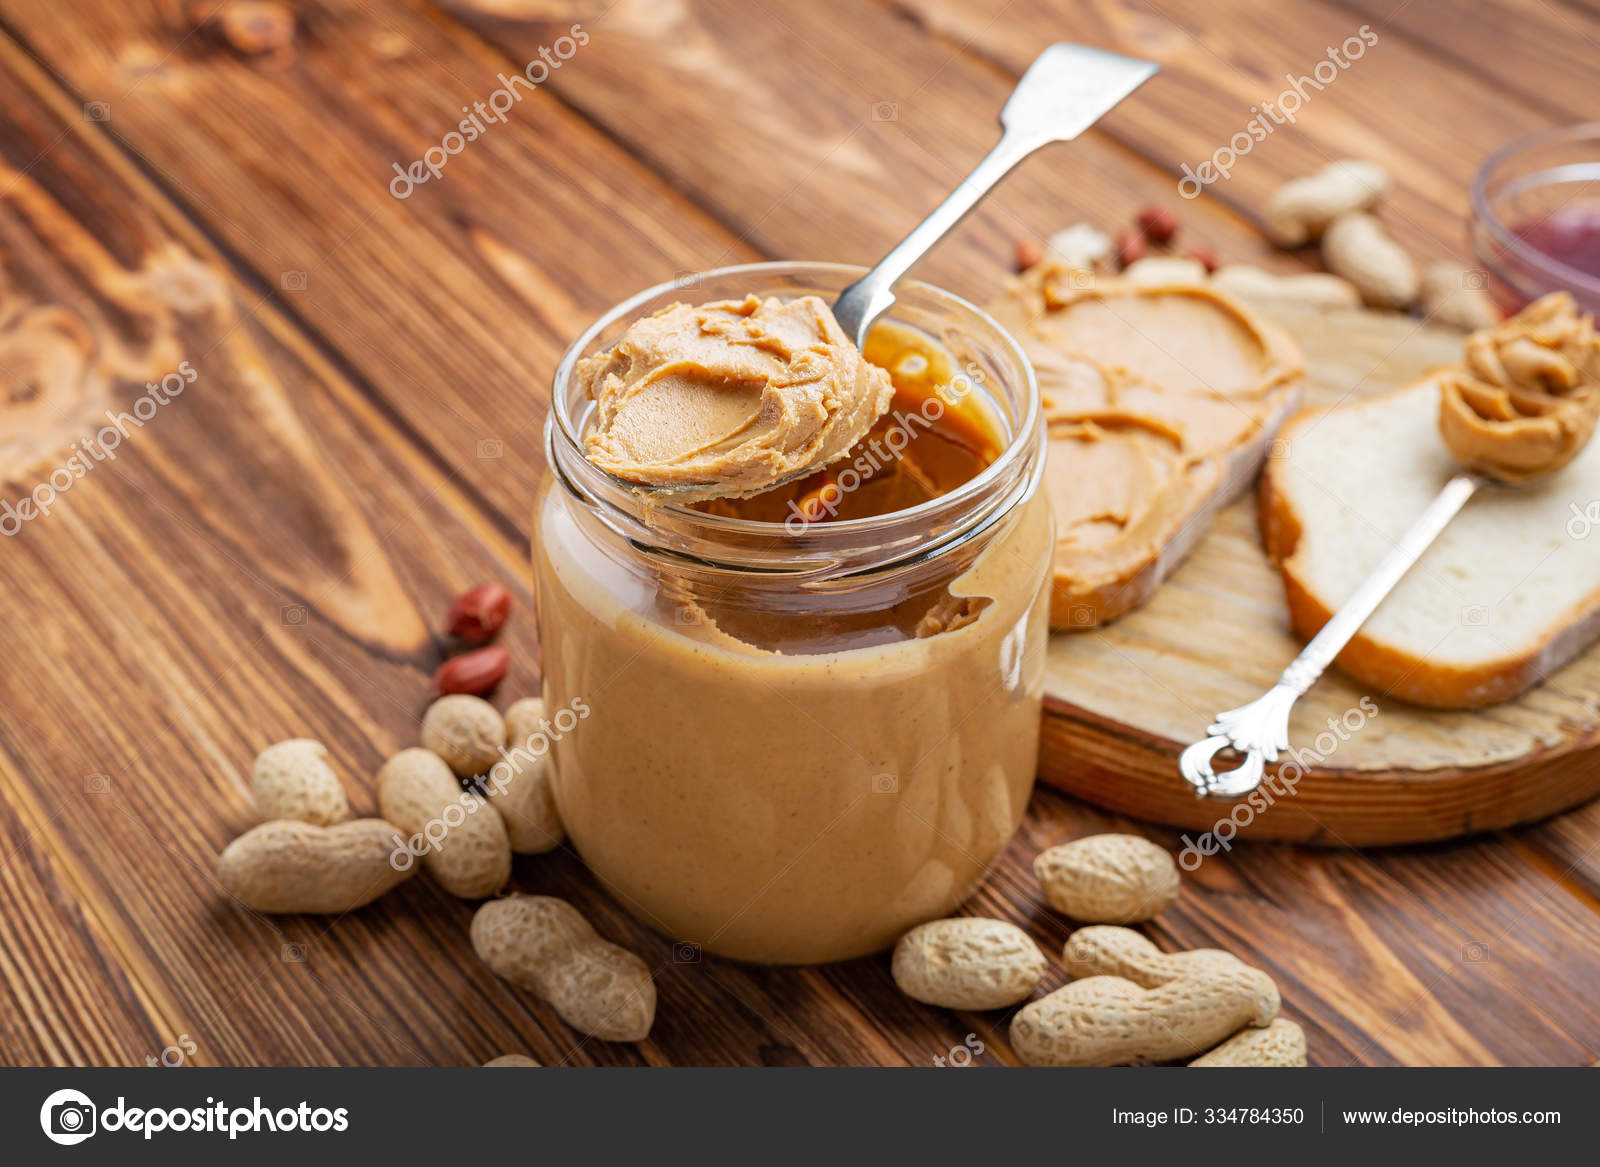 https://st3.depositphotos.com/27756932/33478/i/1600/depositphotos_334784350-stock-photo-peanut-butter-in-spoon-near.jpg